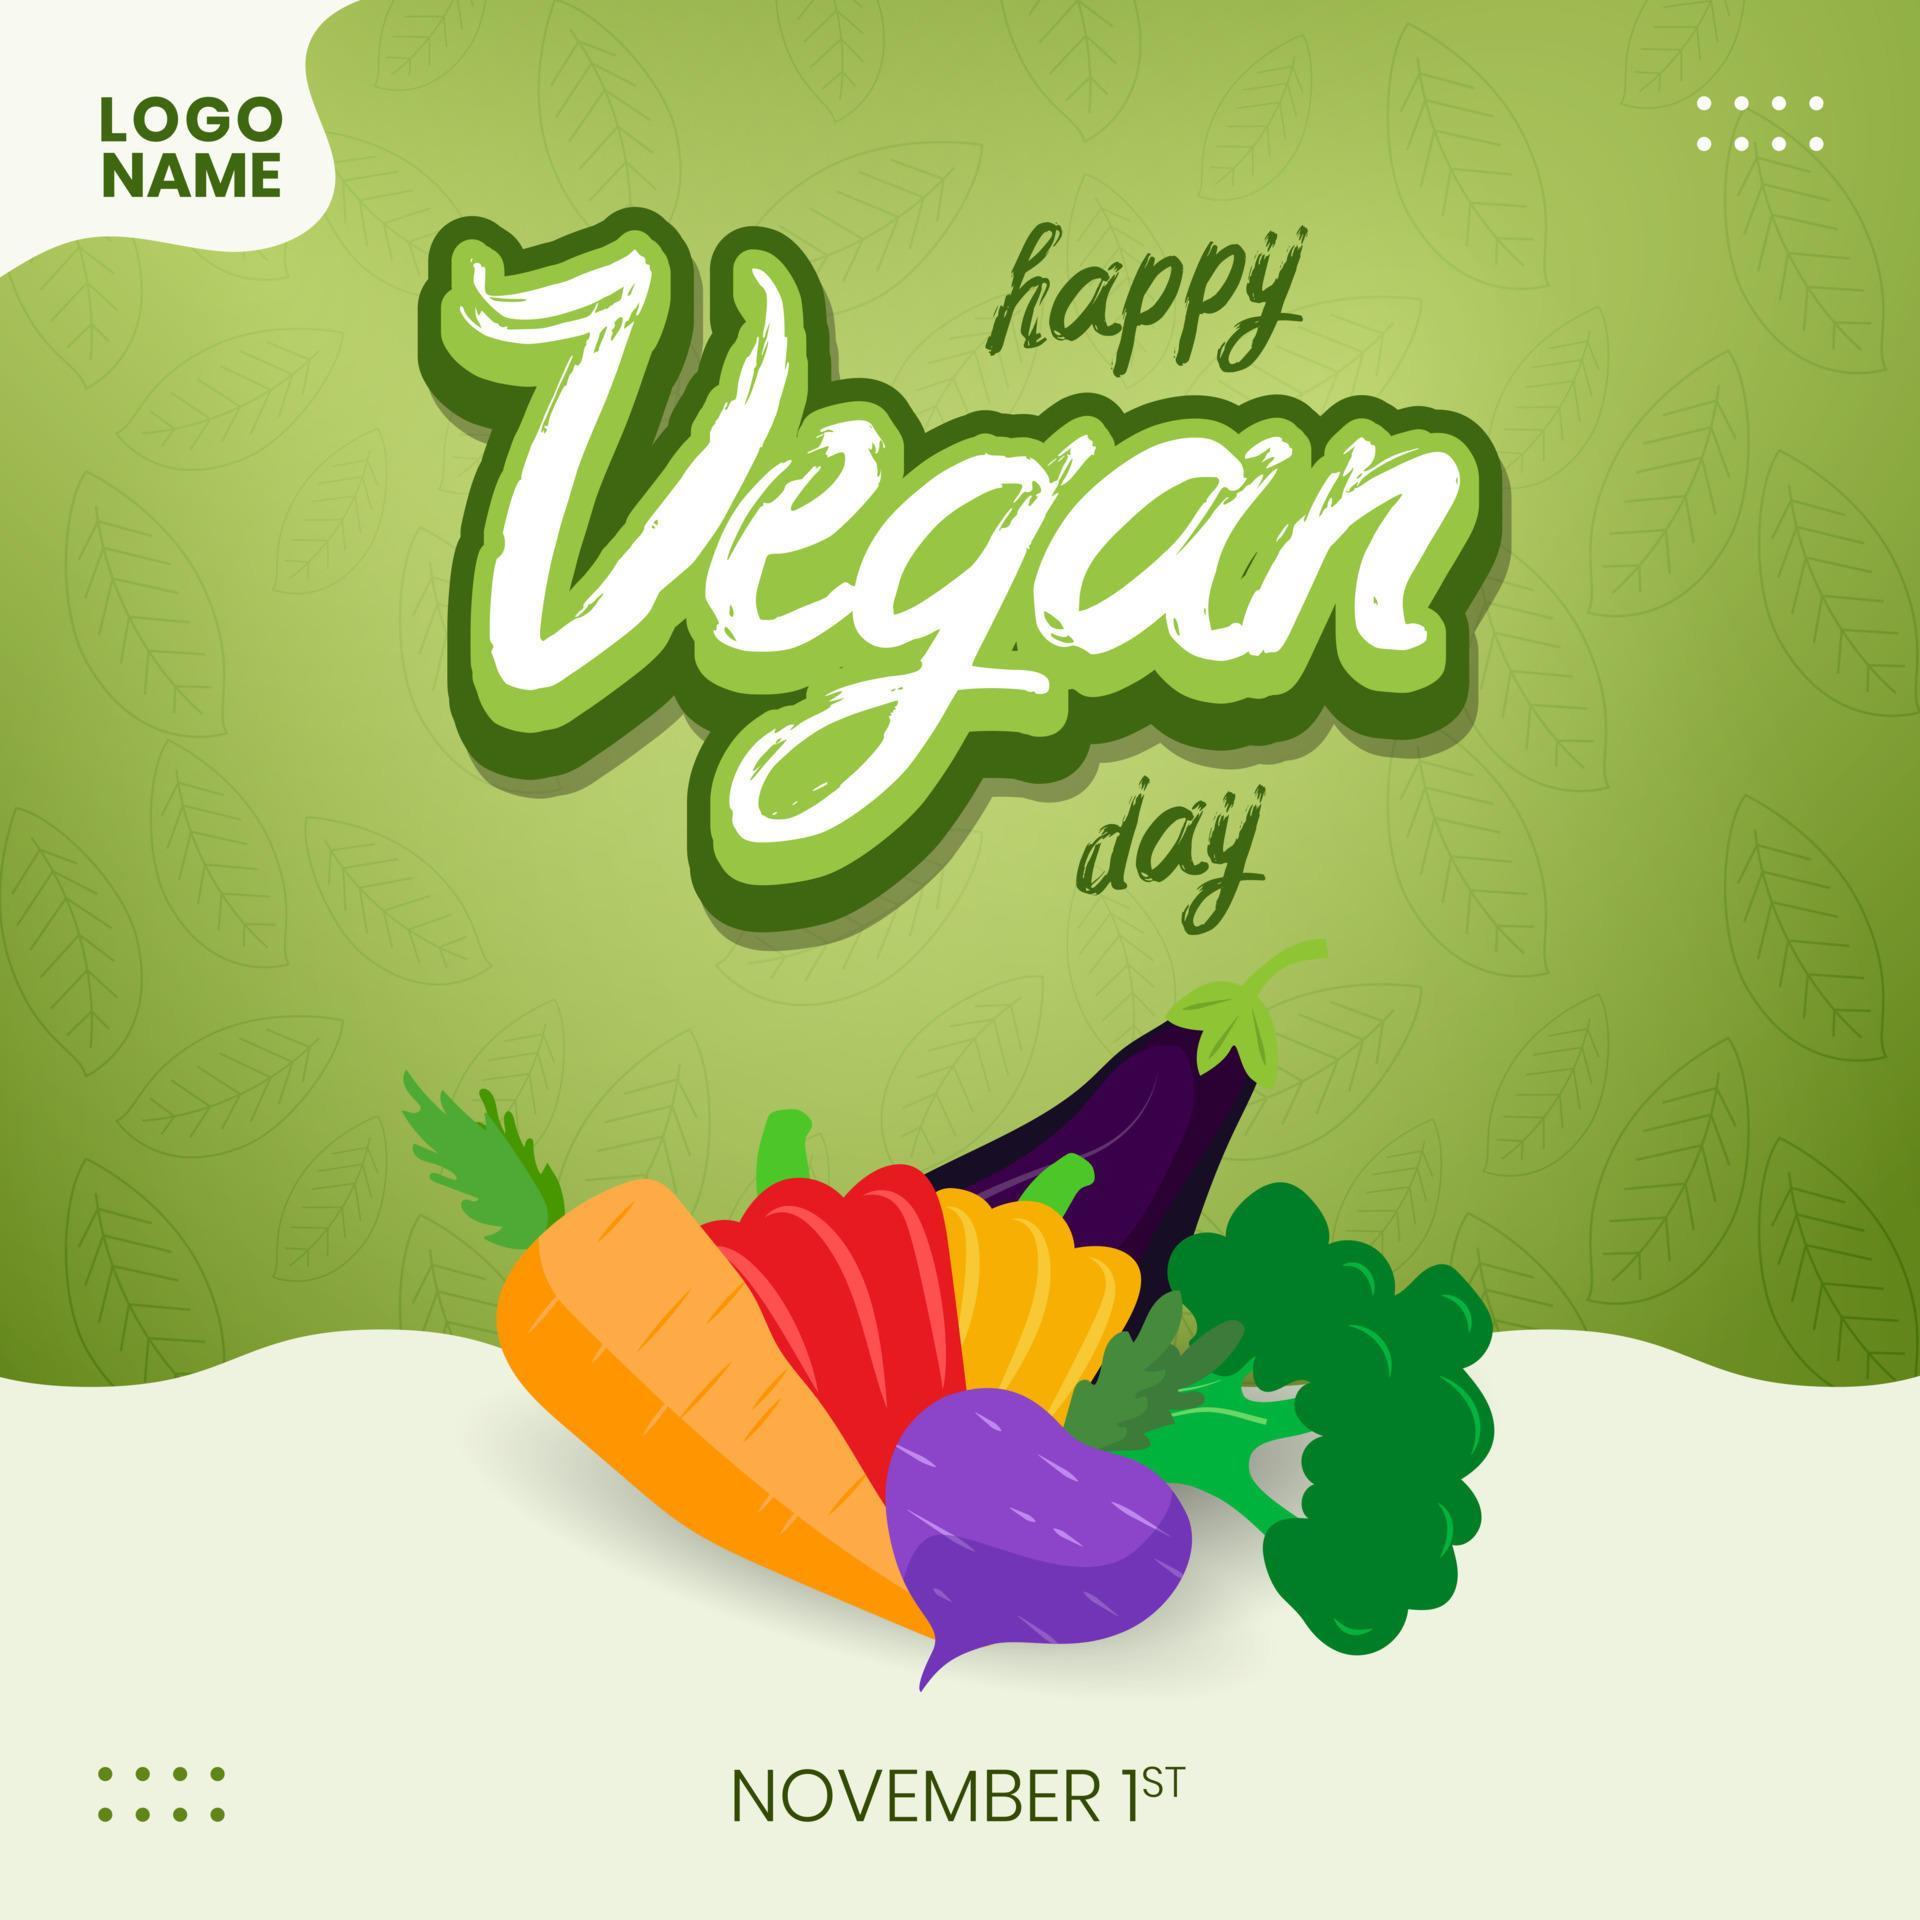 Happy World Vegan Day banner and social media post design. World Vegan